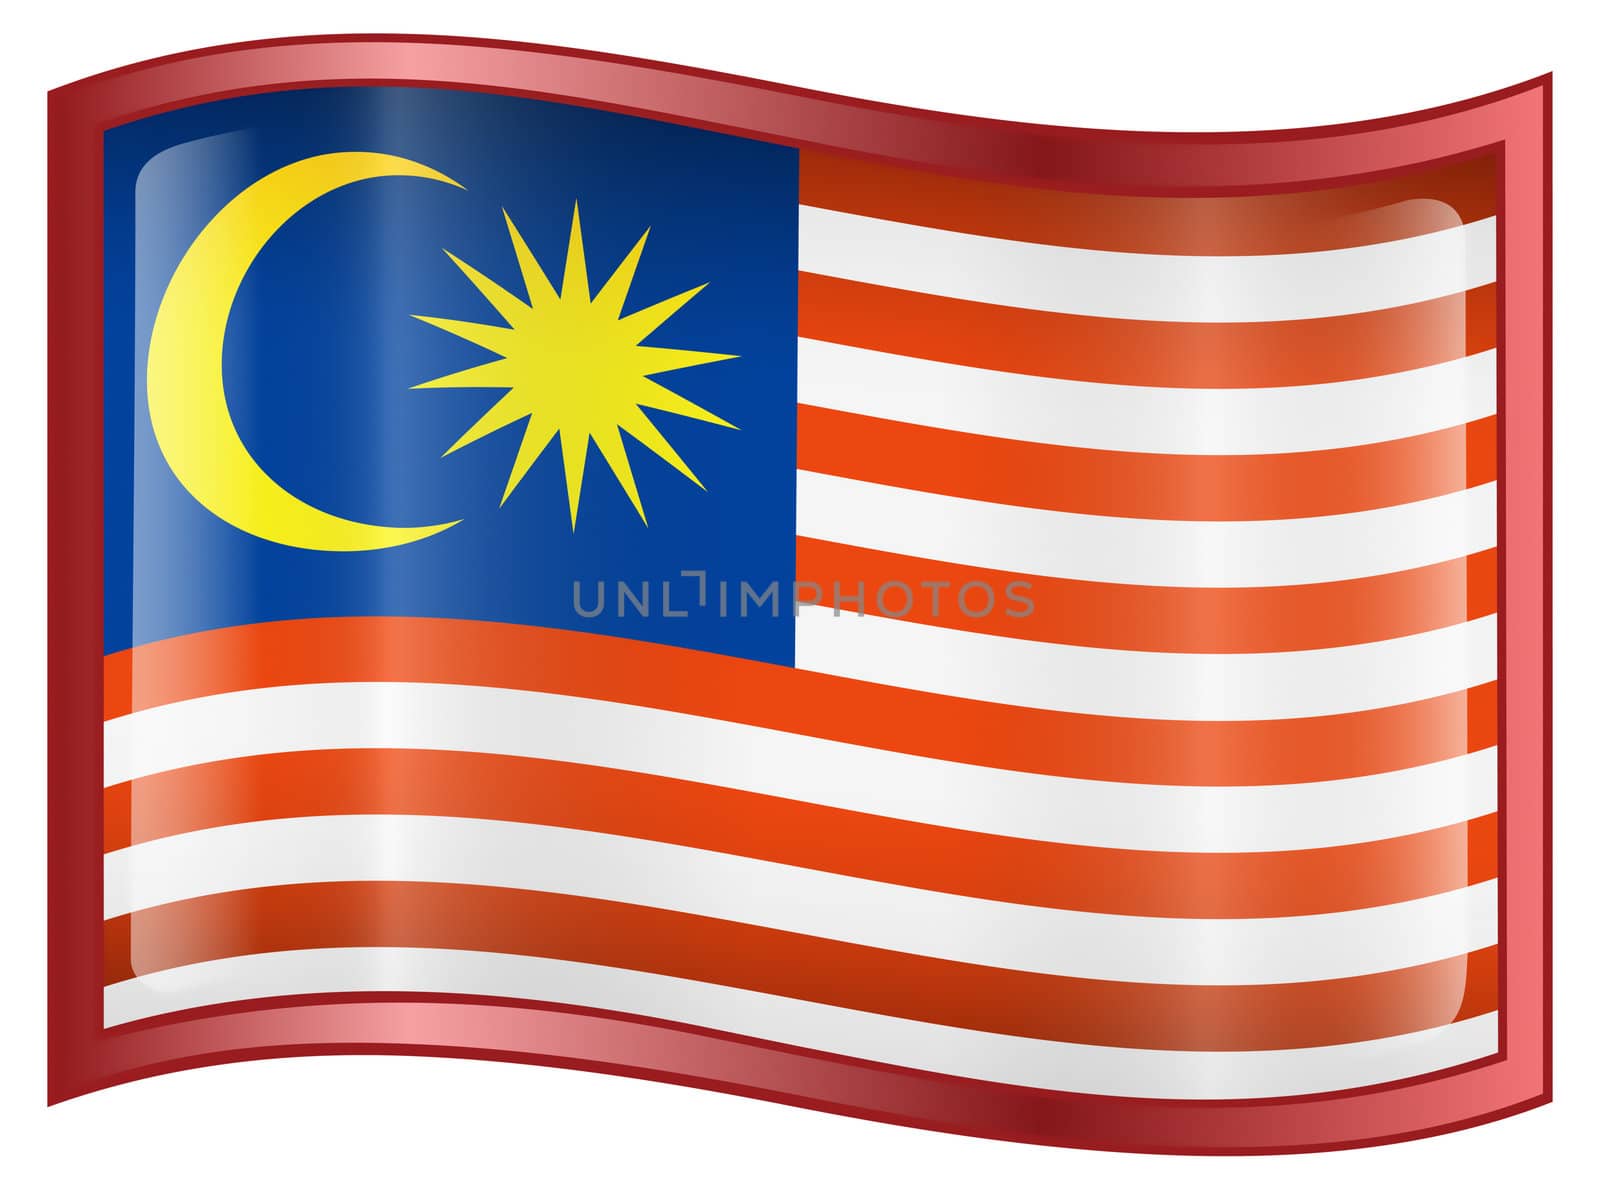 Malaysia Flag Icon, isolated on white background.